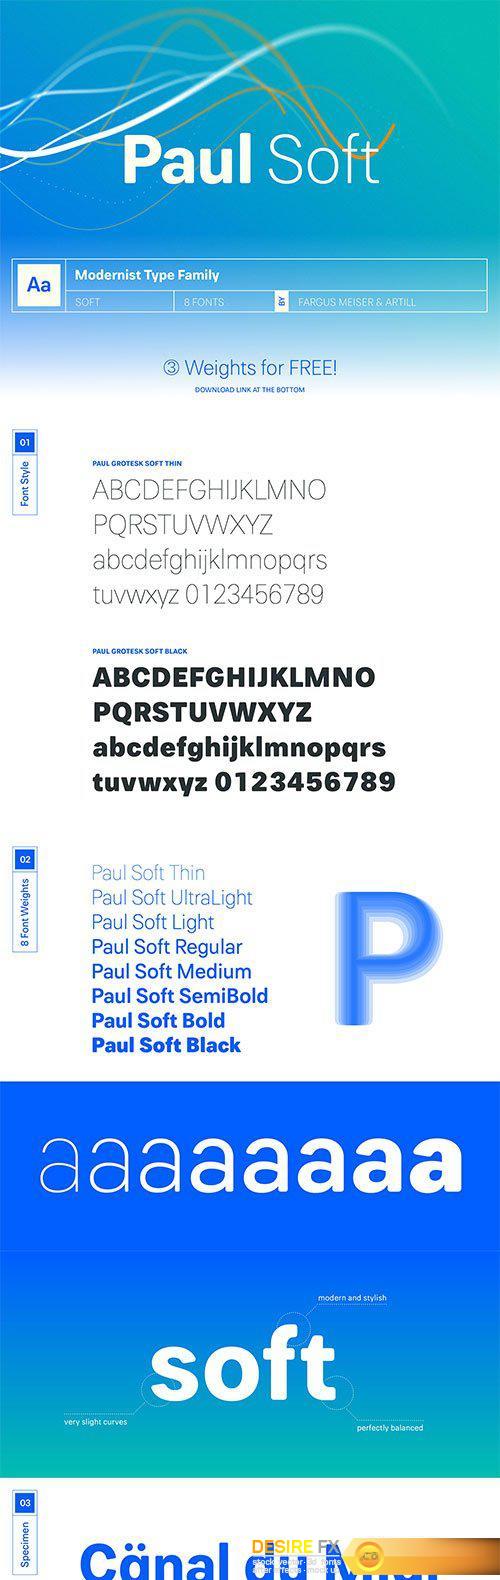 Paul Soft Font Family